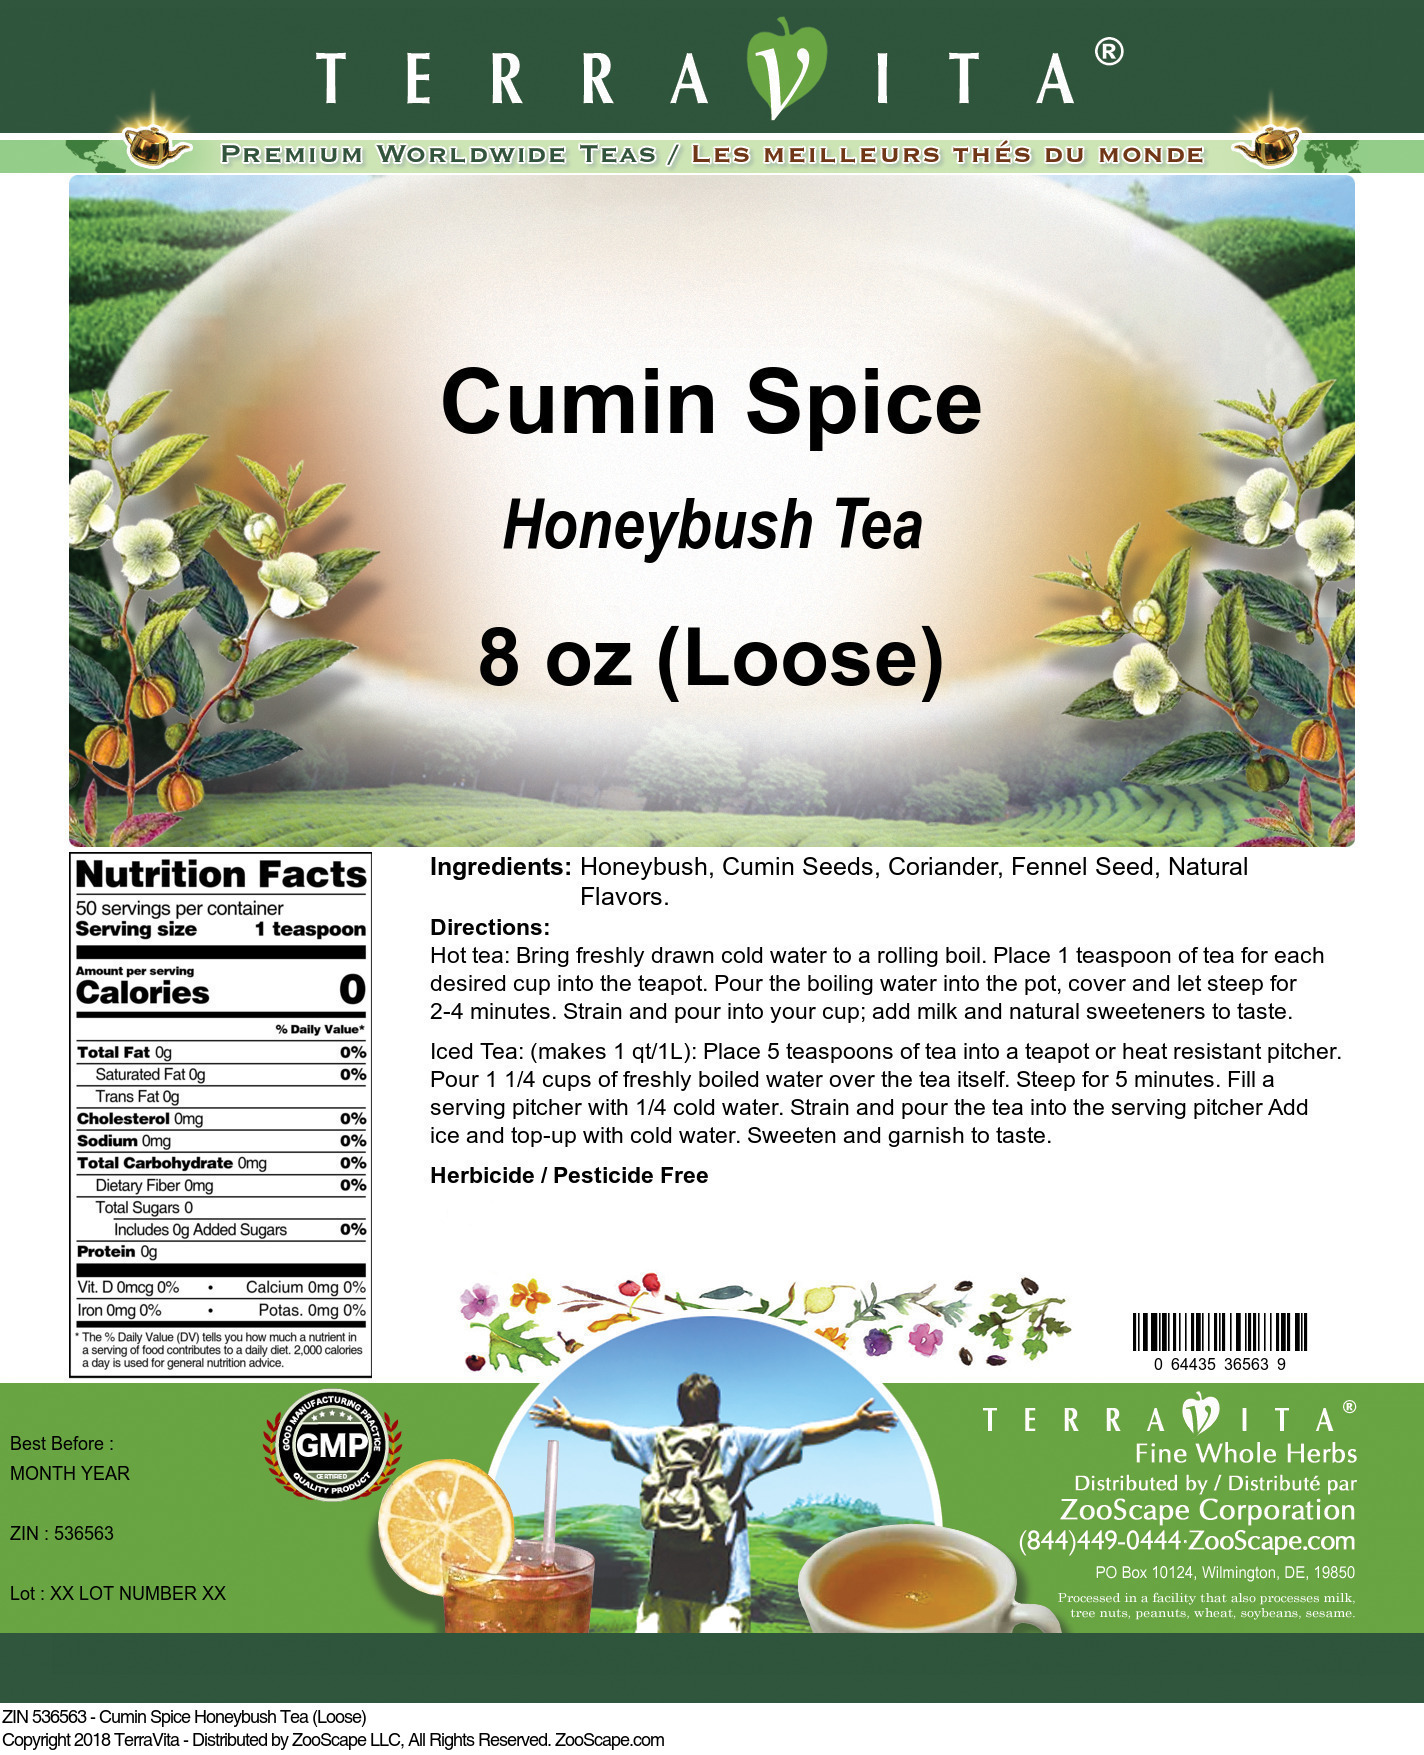 Cumin Spice Honeybush Tea (Loose) - Label